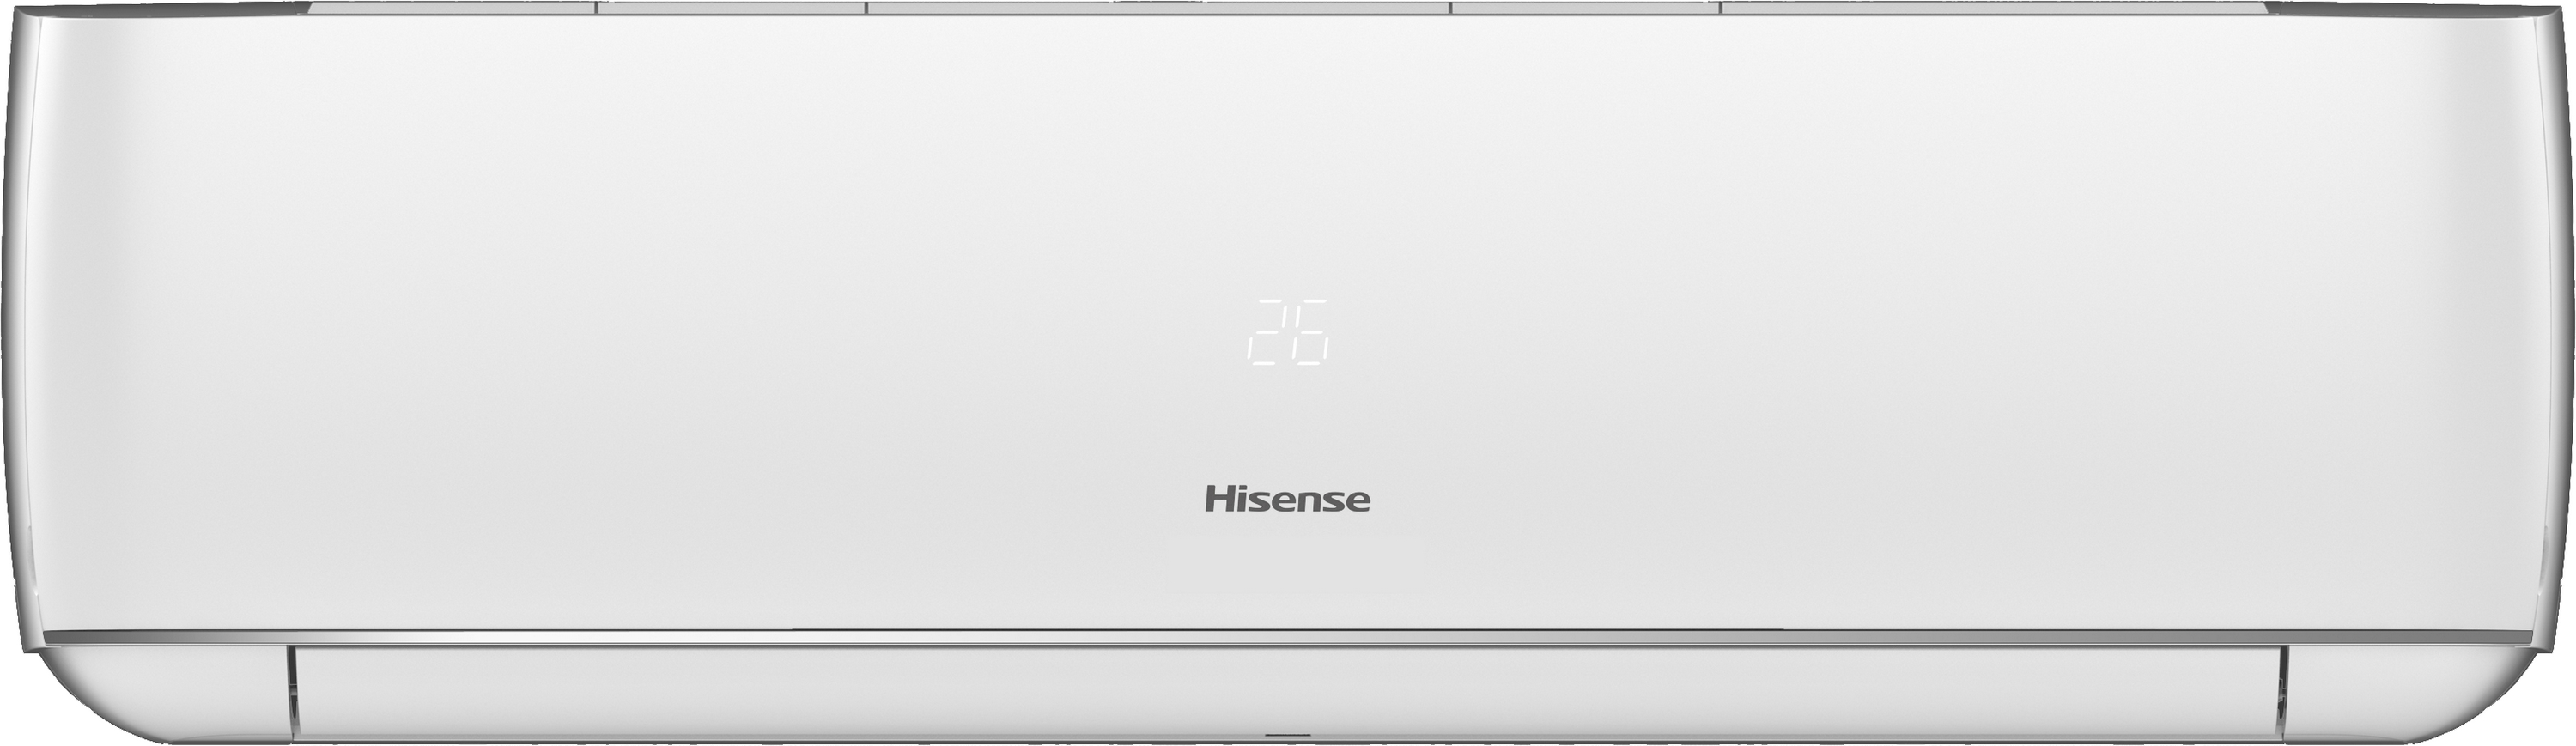 Кондиционер сплит-система Hisense Husky TV25XE0E цена 0.00 грн - фотография 2